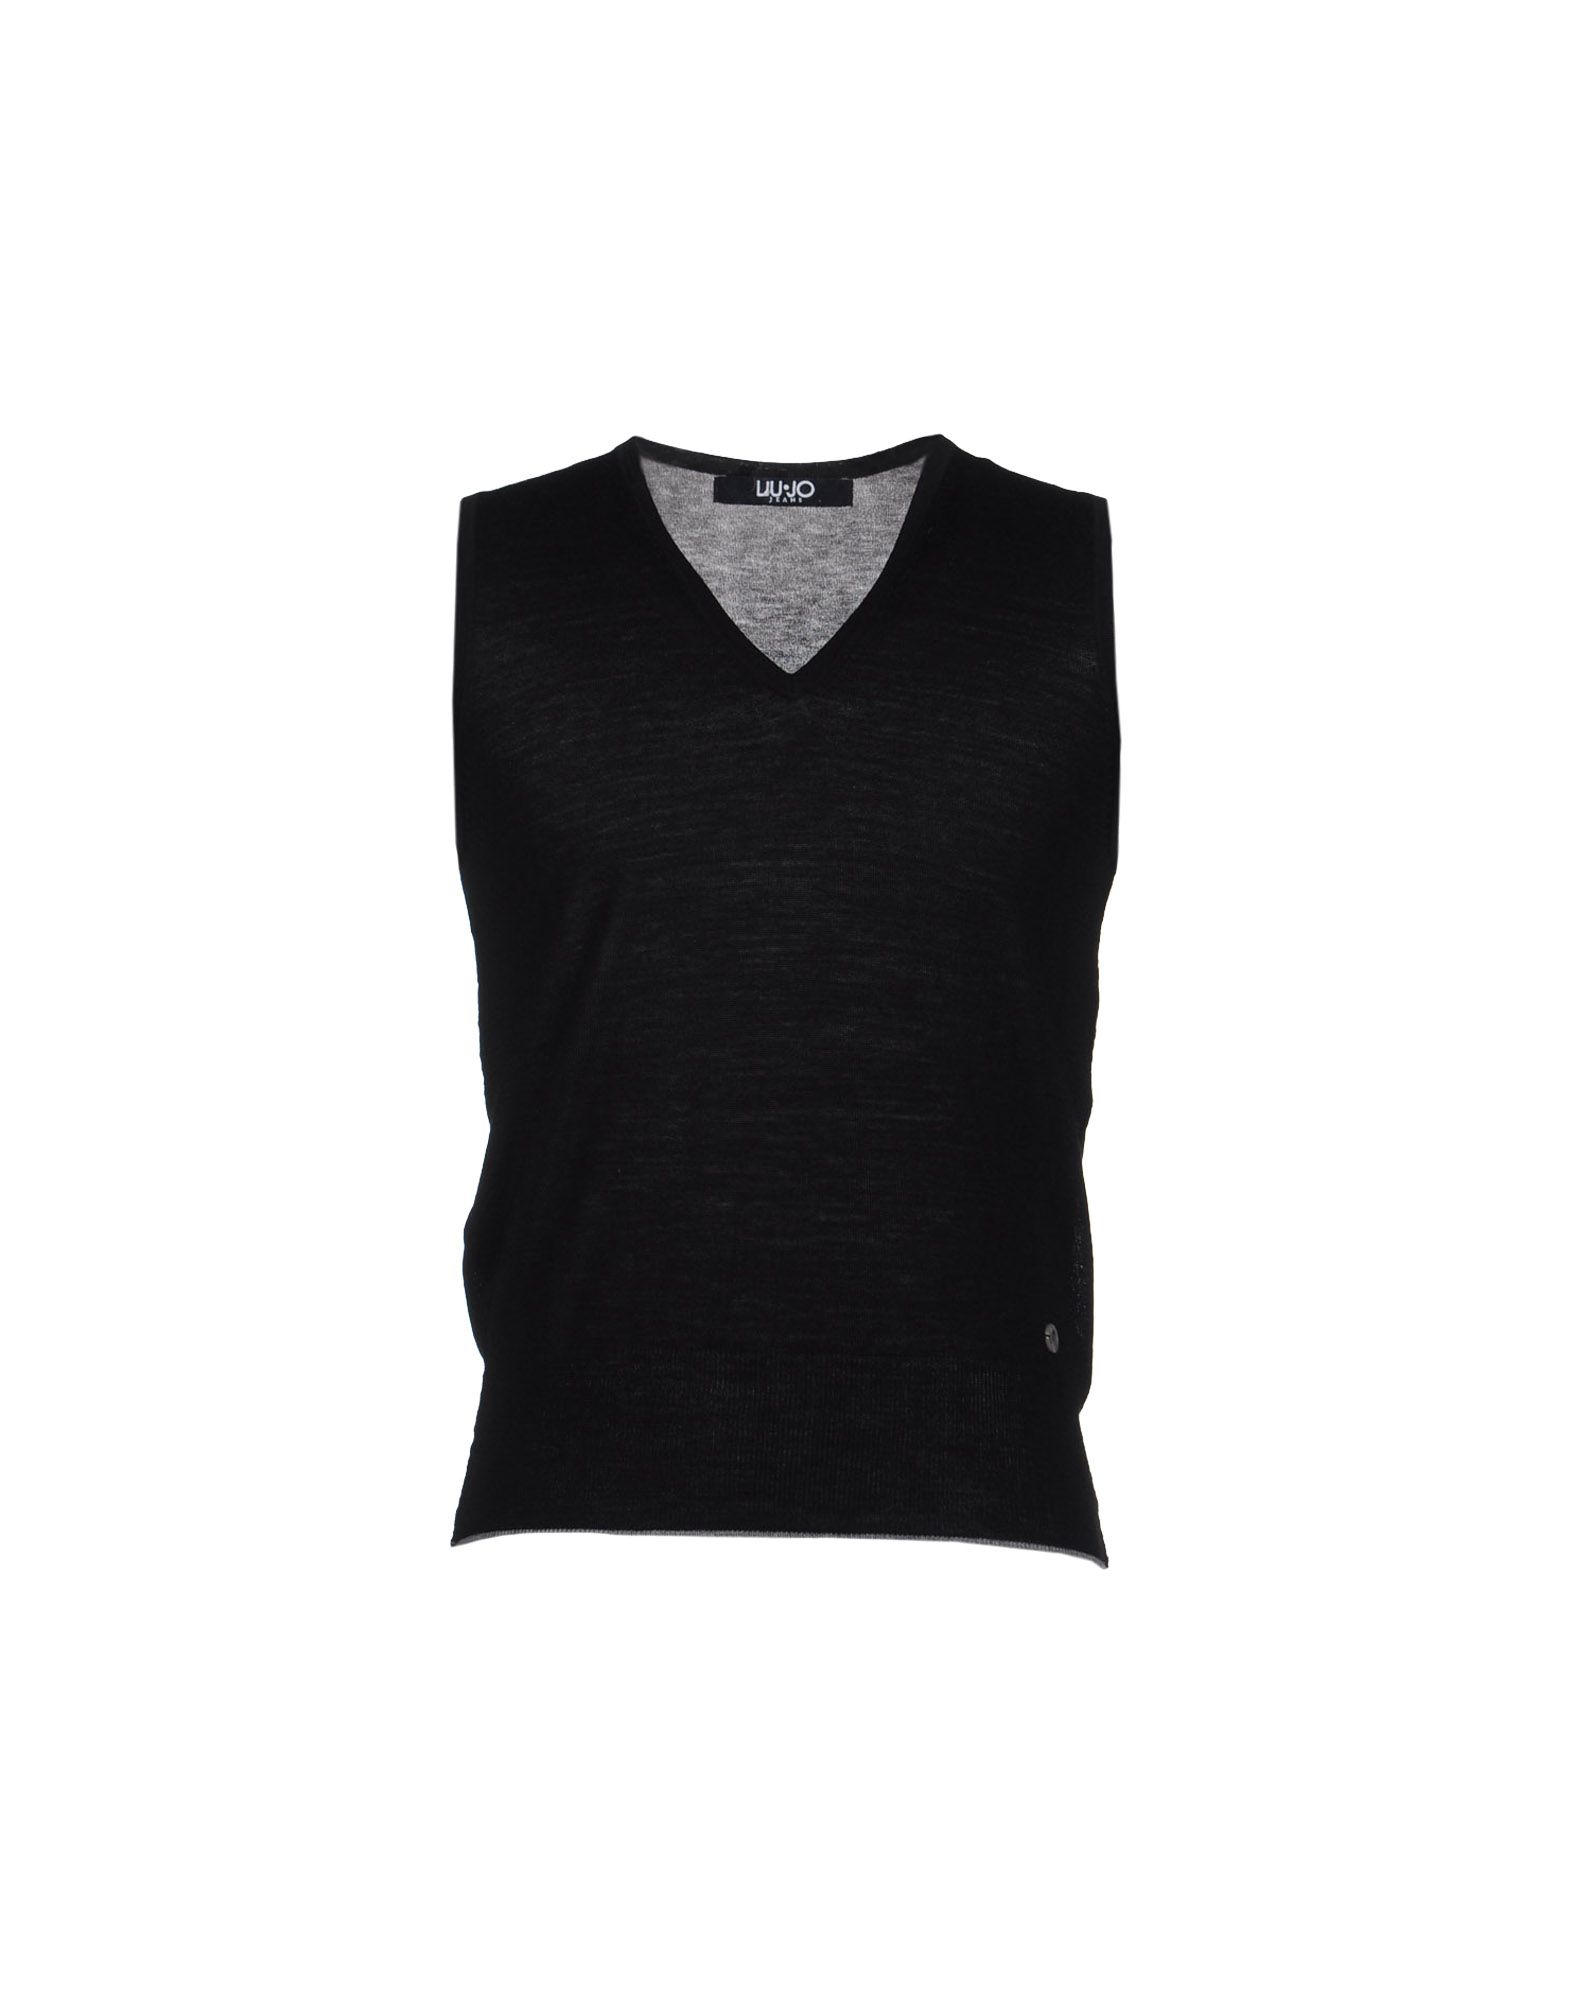 Liu jo Sweater Vest in Black for Men - Save 71% | Lyst